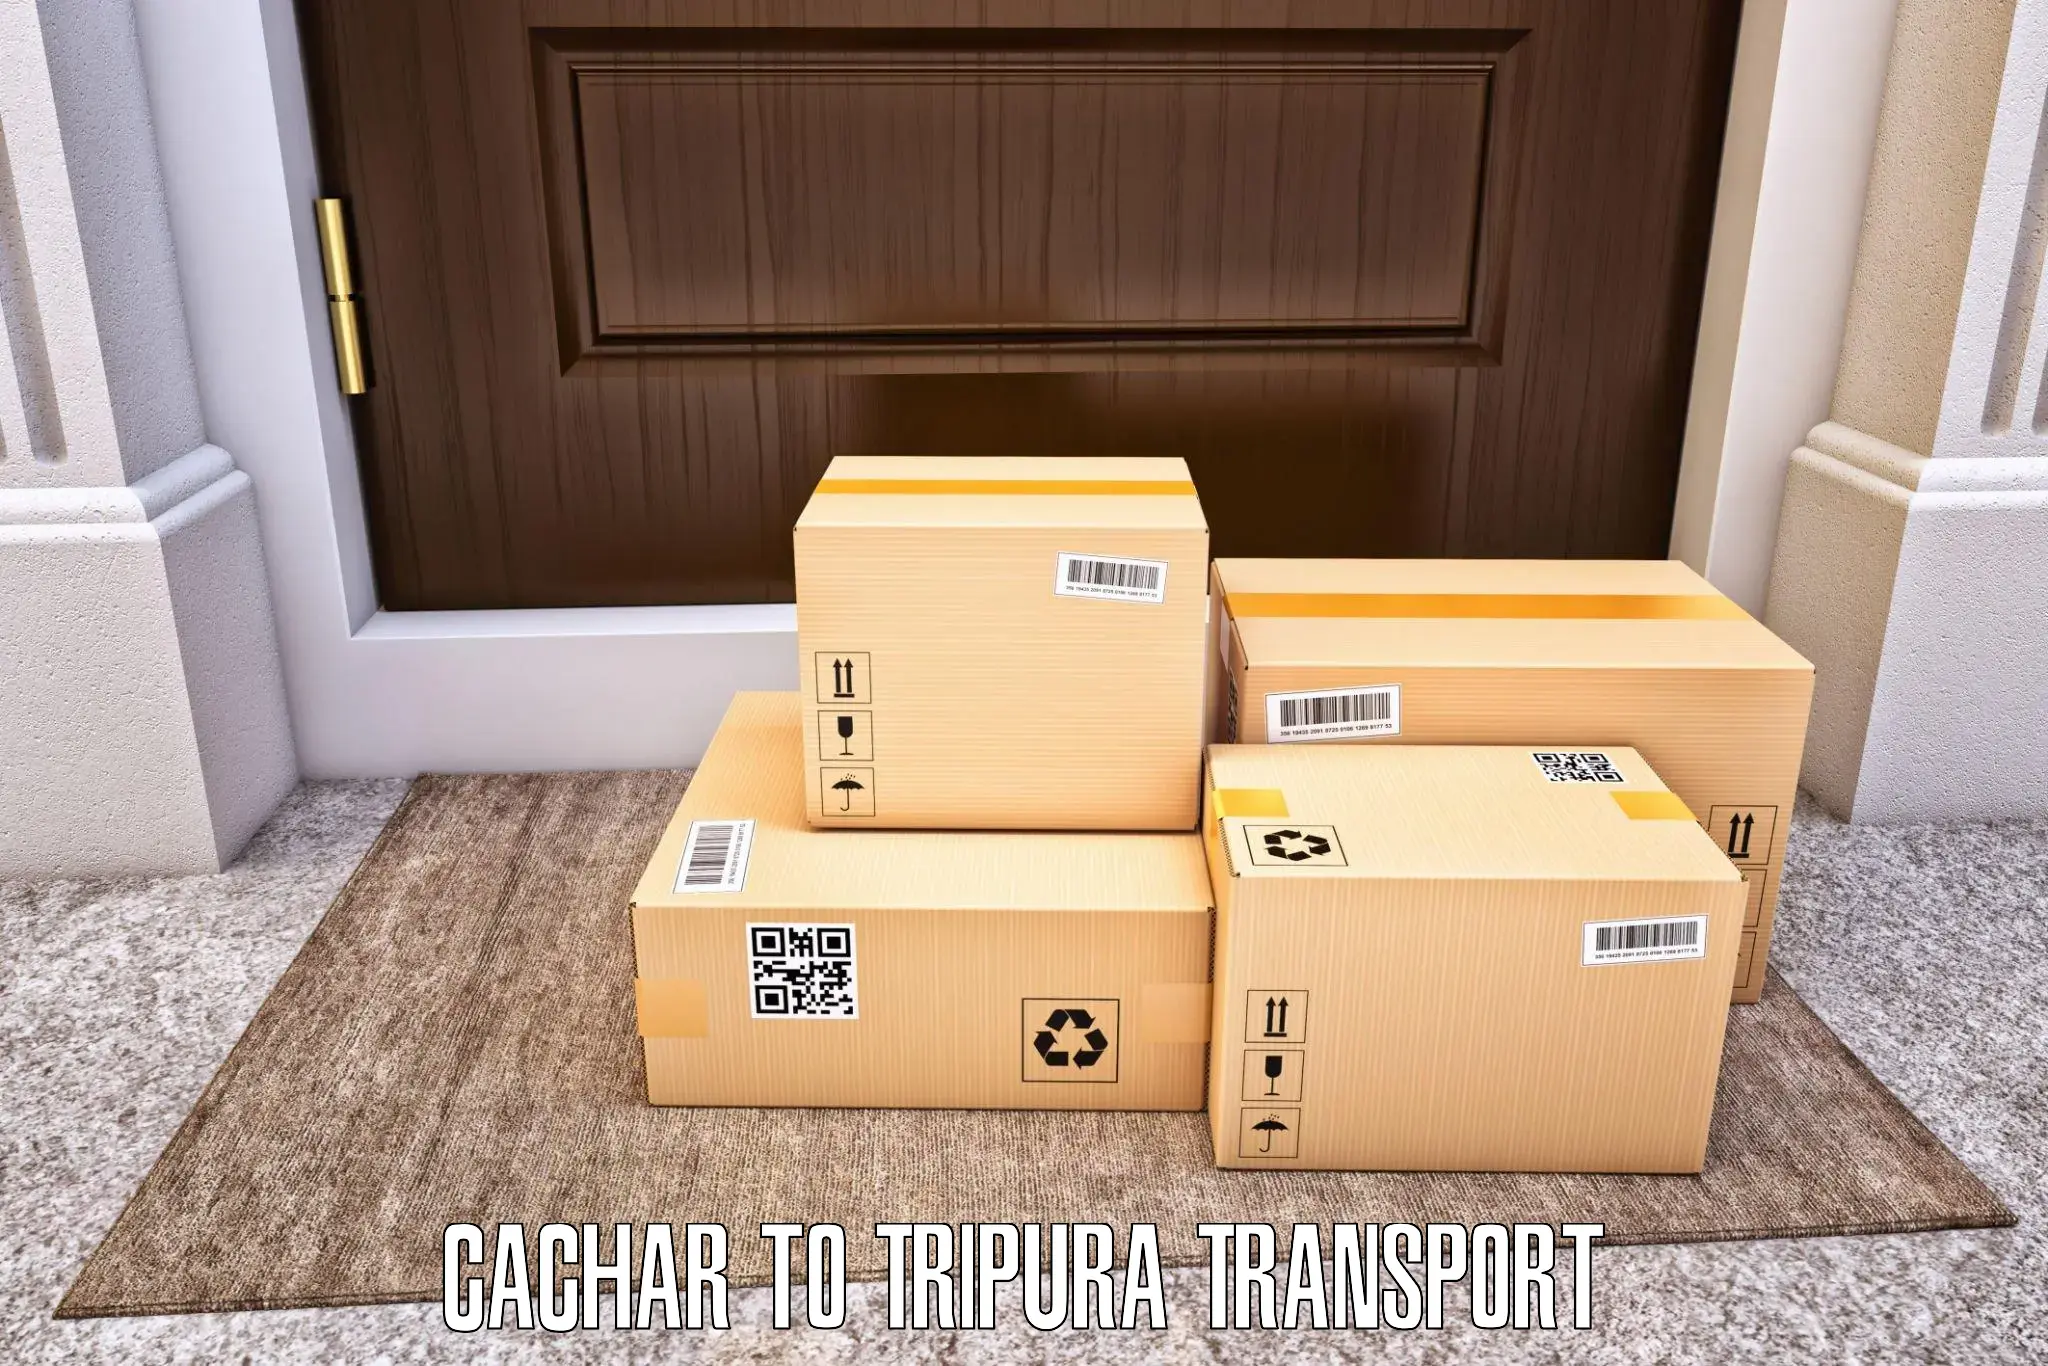 Transport shared services Cachar to Bishalgarh